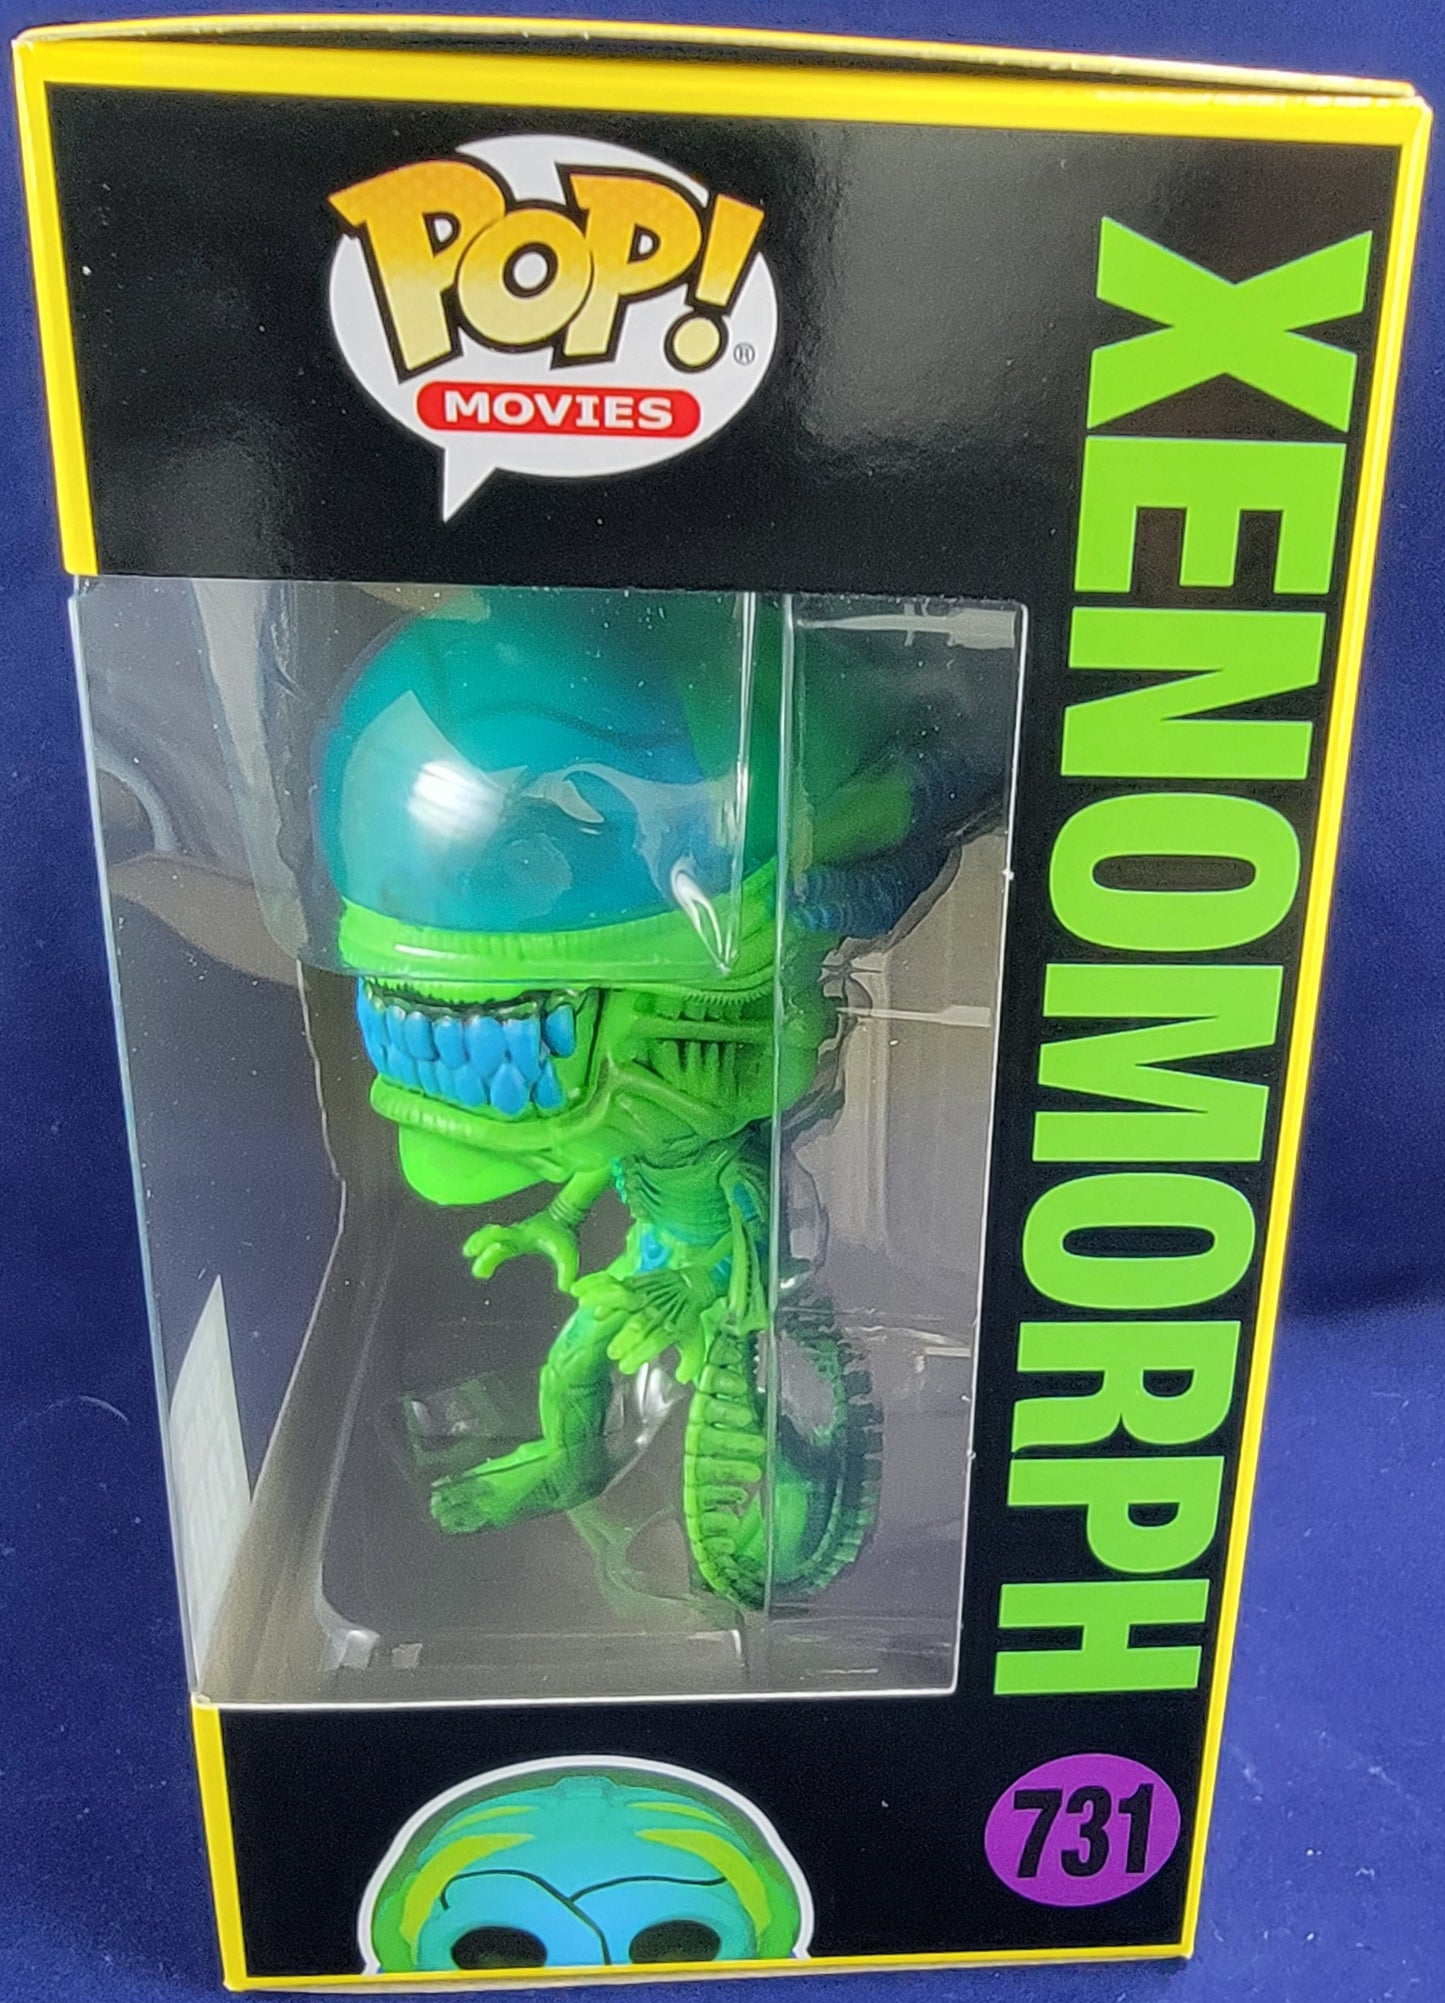 Xenomorph hot topic scare fair 2023 exclusive funko # 731 (nib)
With pop protector